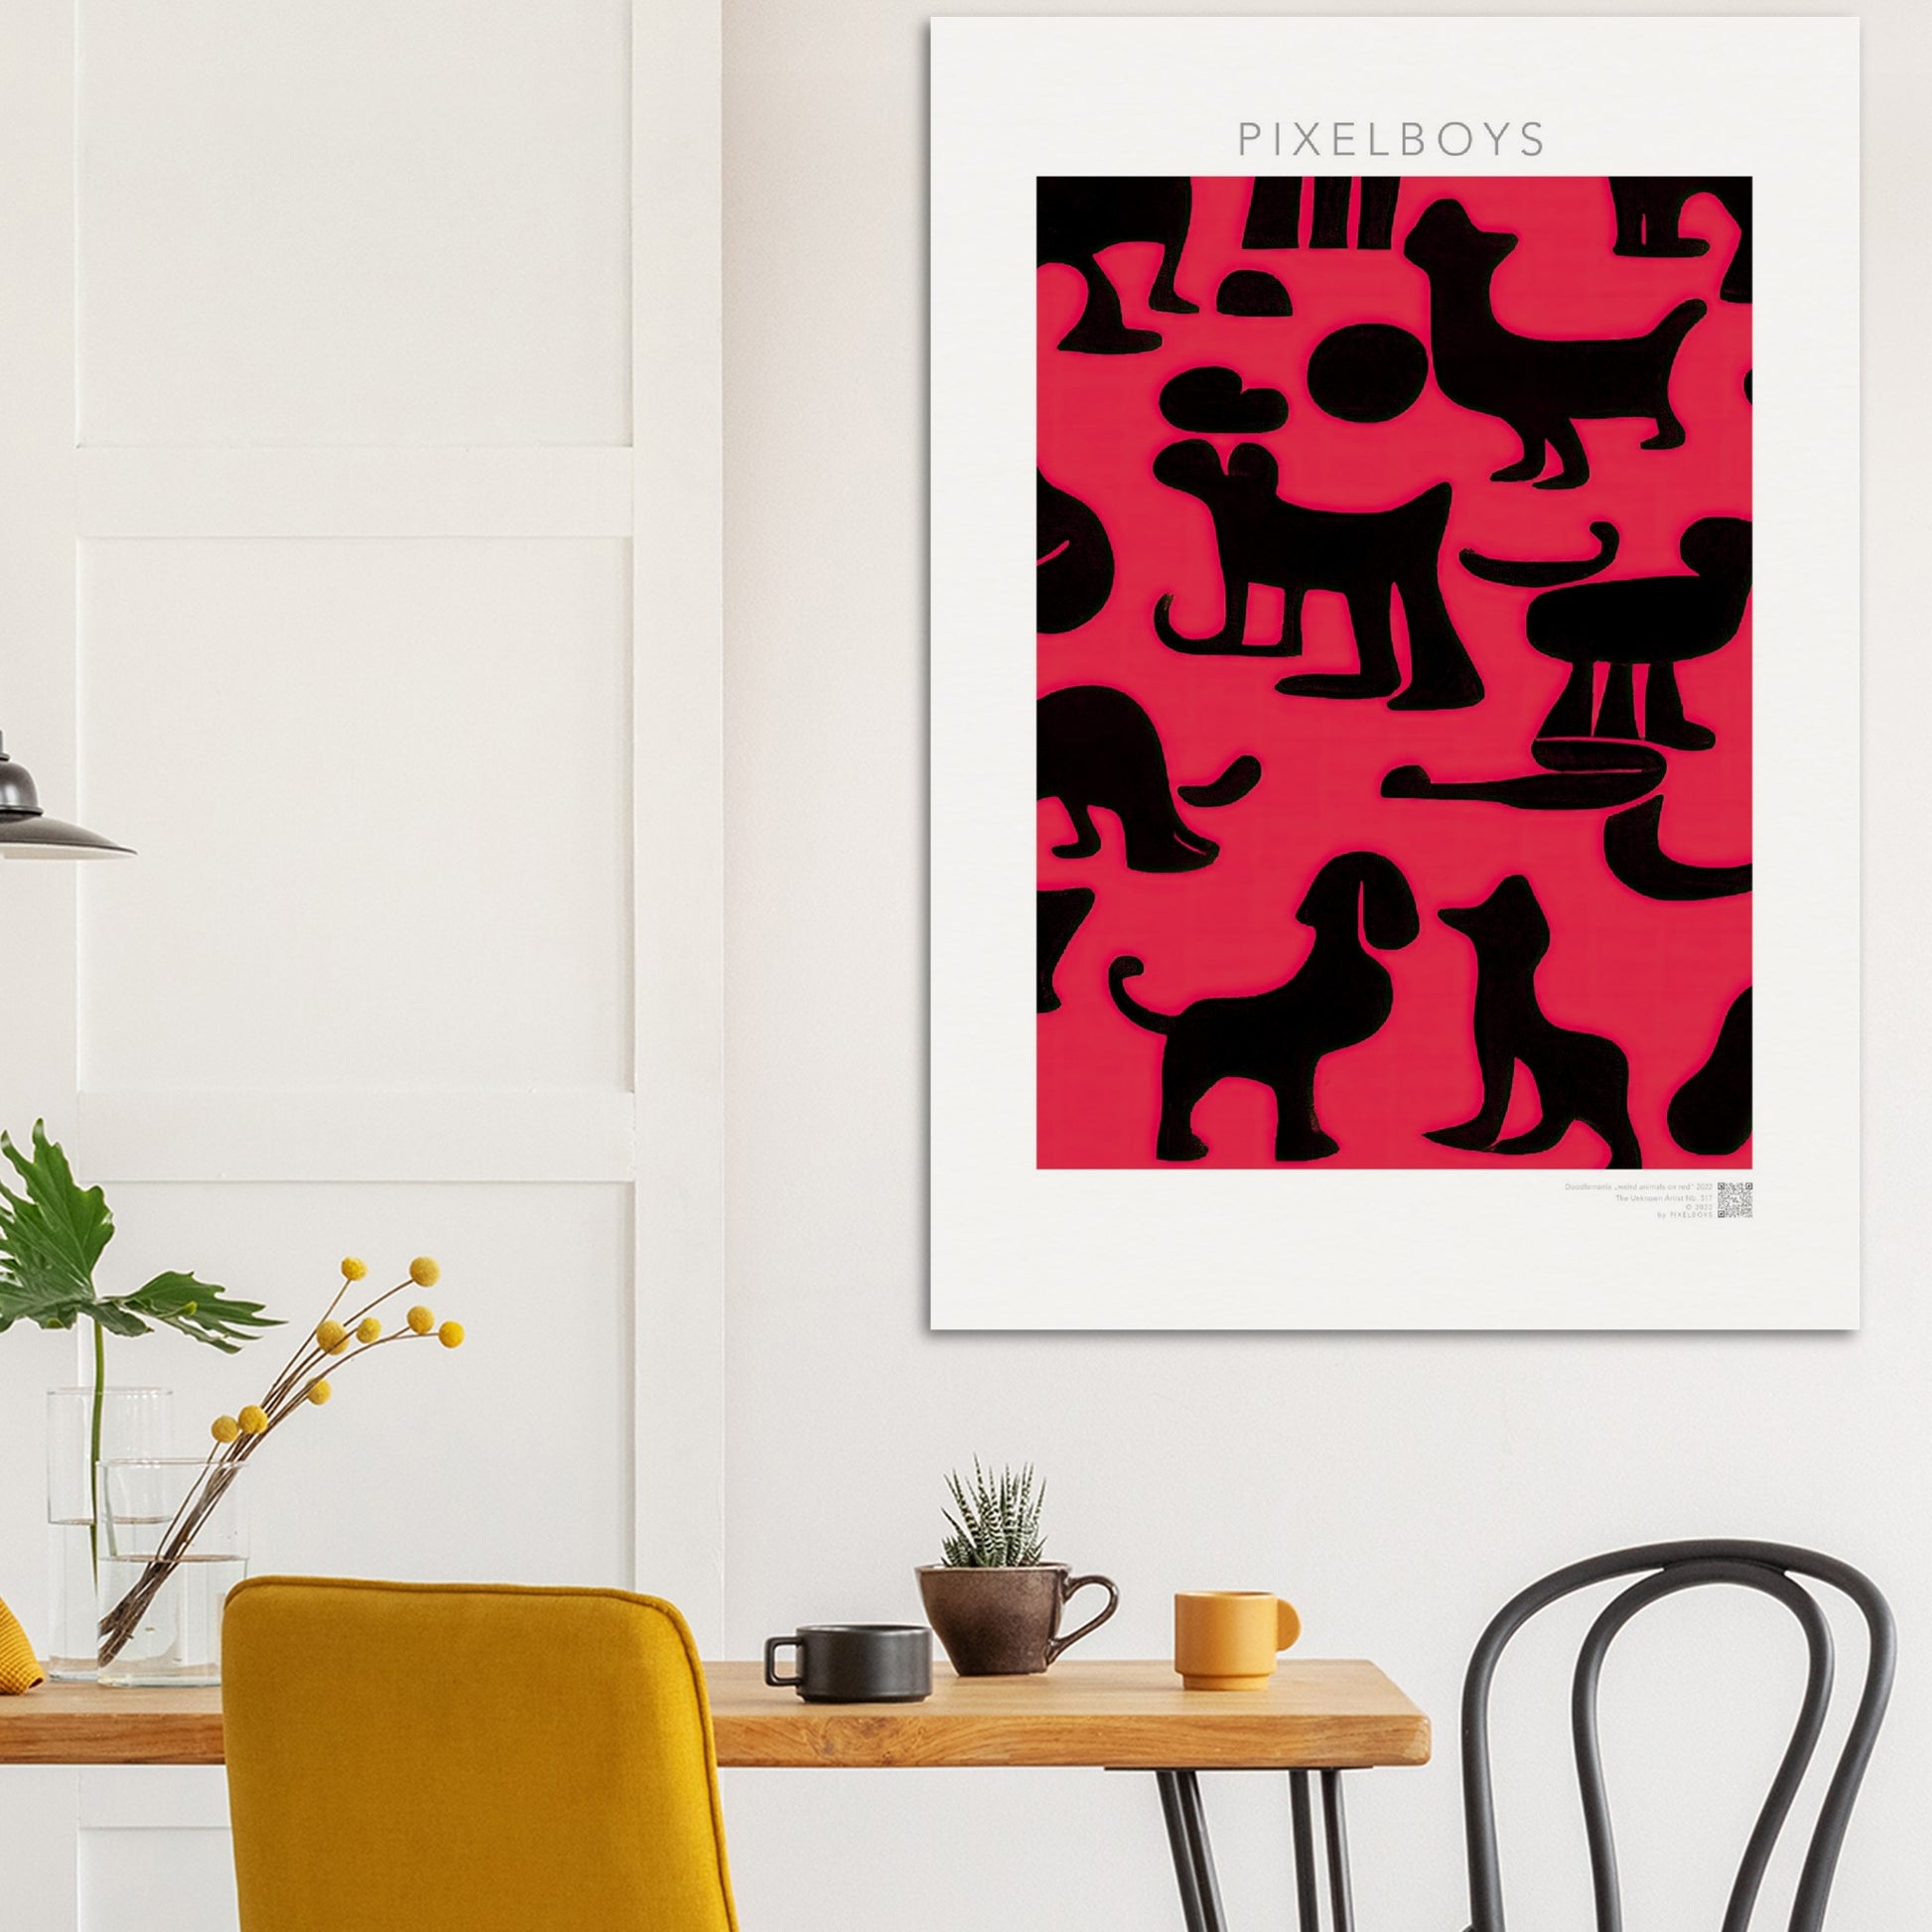 Poster in Museumsqualität - Doodlemania "weird animals on red"- No.2 - Hunde - Katzen - Doodle Kunst - dogs - Cats - gastro - Poster mit Rahmen - doodle artwork - Acrylbild - Kunstdruck - Wandbild - office Poster - Poster with frame -  Künstler: Pixelboys & The Unknown Artist Nb.517 - keith haring - anti stress art - Art Brand - 